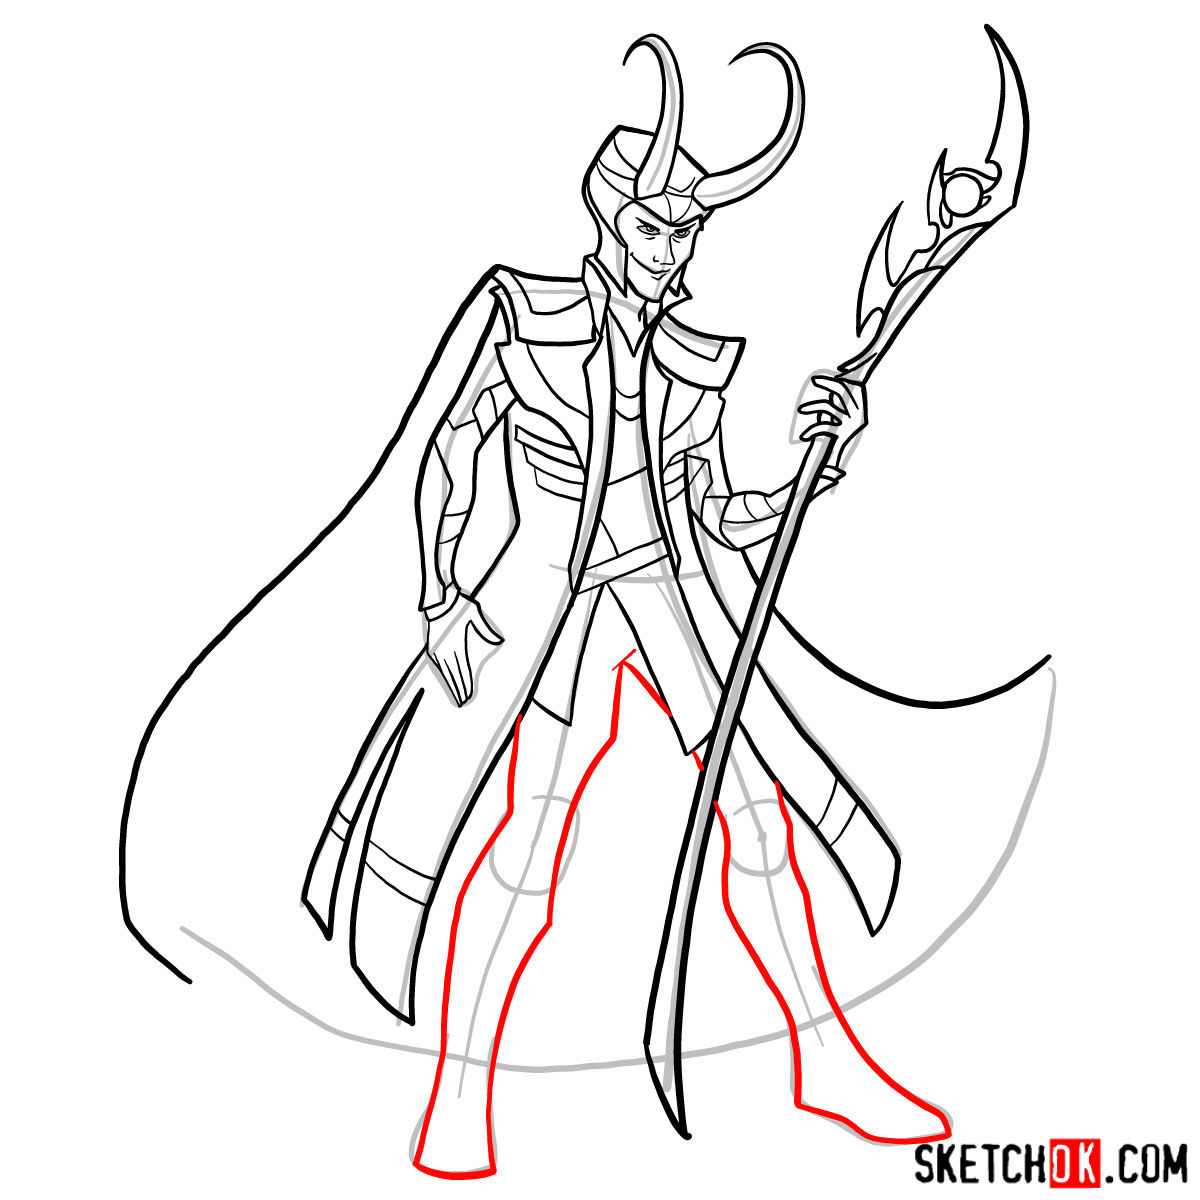 How to draw Loki - Marvel Comics villian - step 16